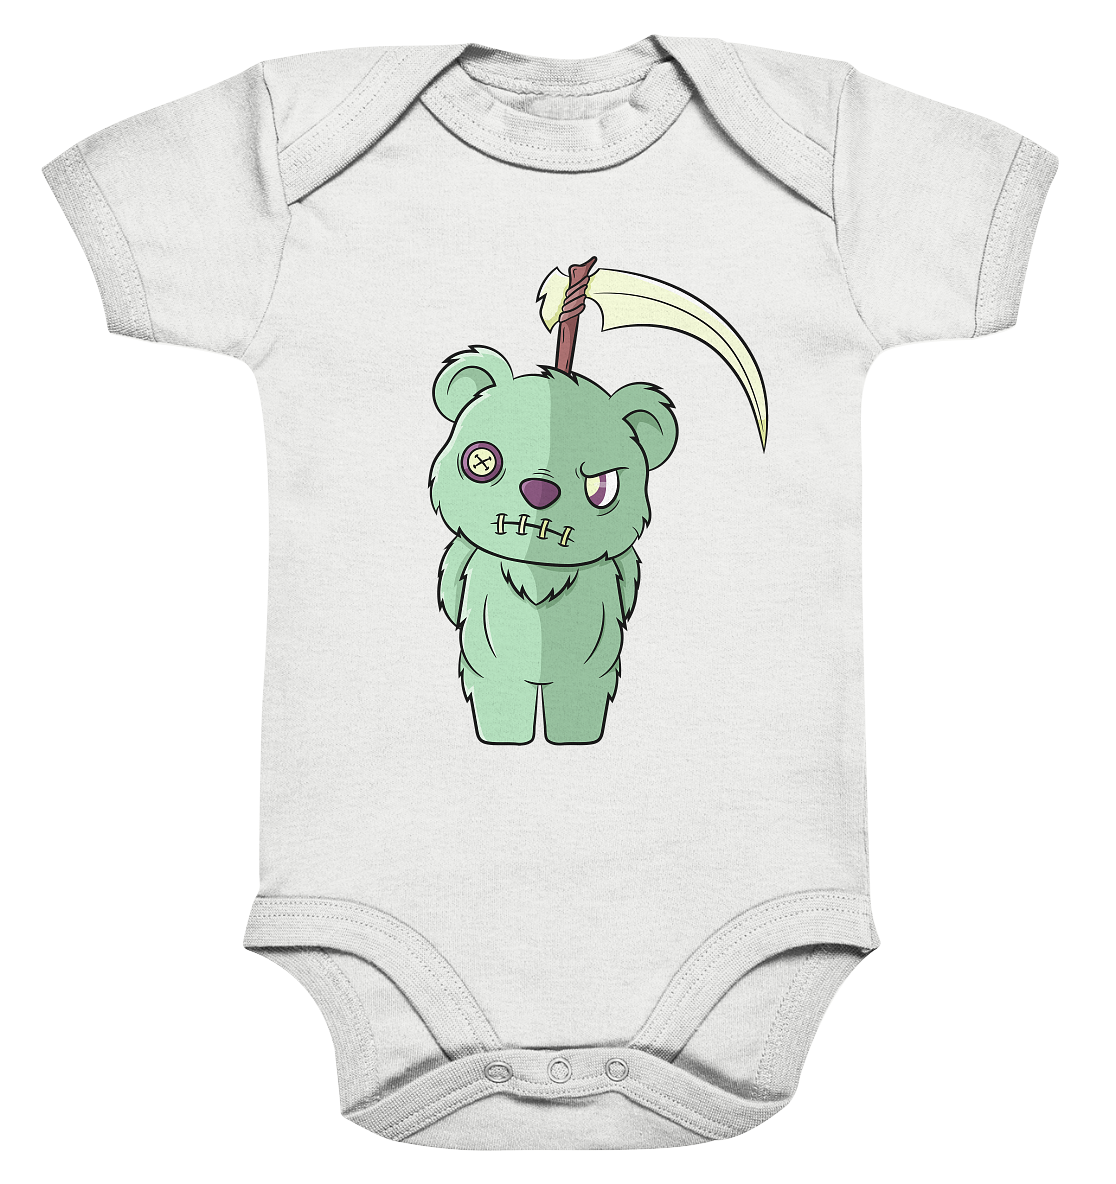 Kawaii Green Teddy - Organic Baby Bodysuite